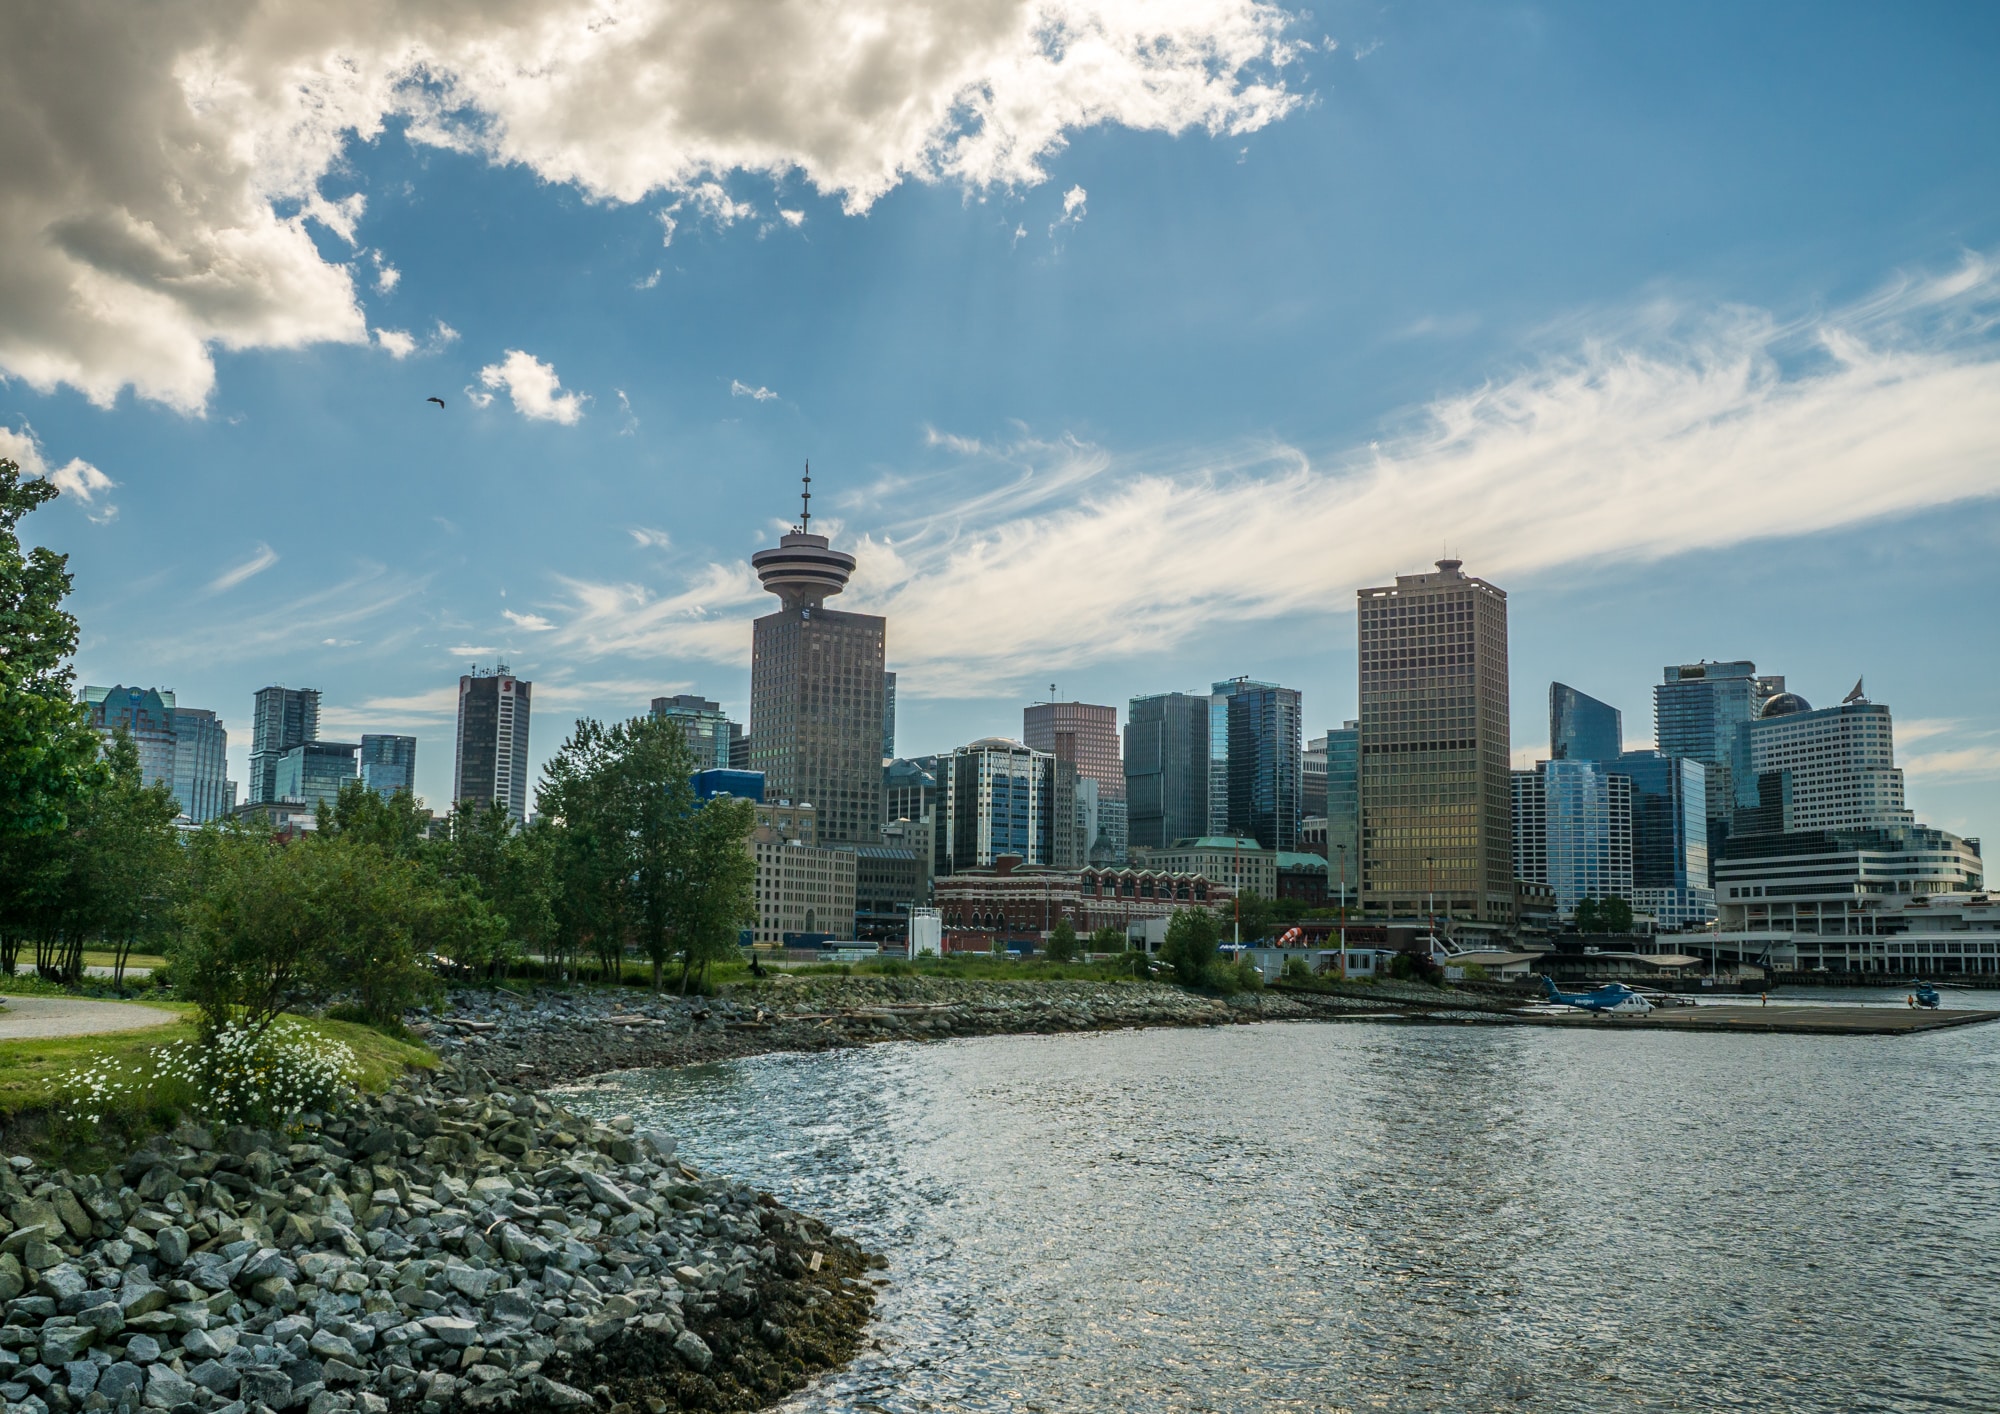 Der runde Turm ist der Vancouver Lookout